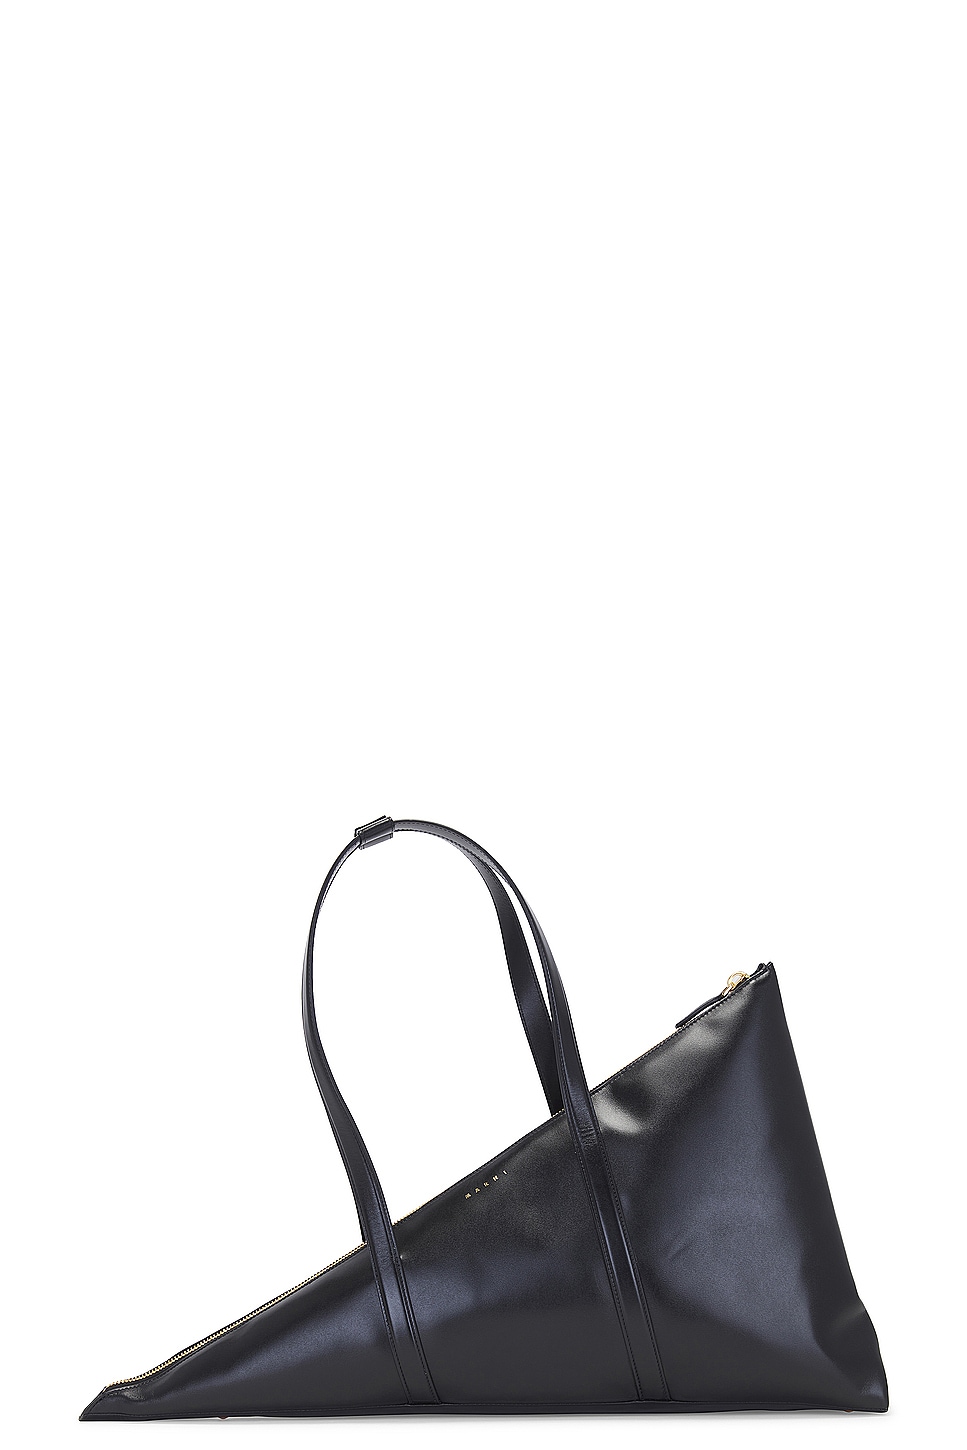 Prisma Duffle Bag in Black